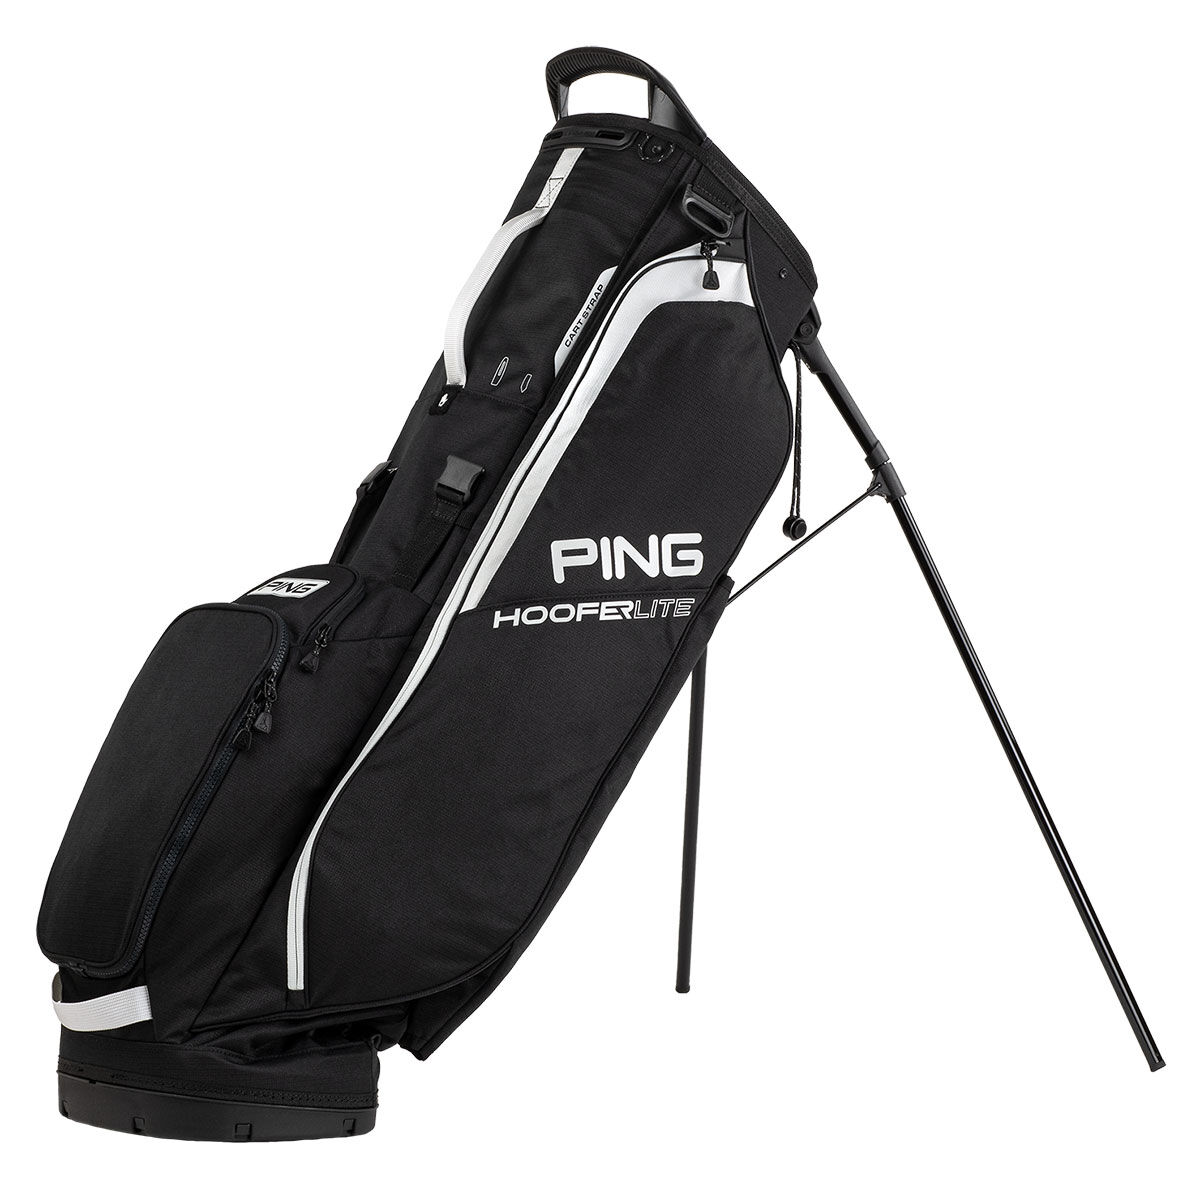 PING Hoofer Lite 231 Golf Stand Bag, Black, one size | American Golf